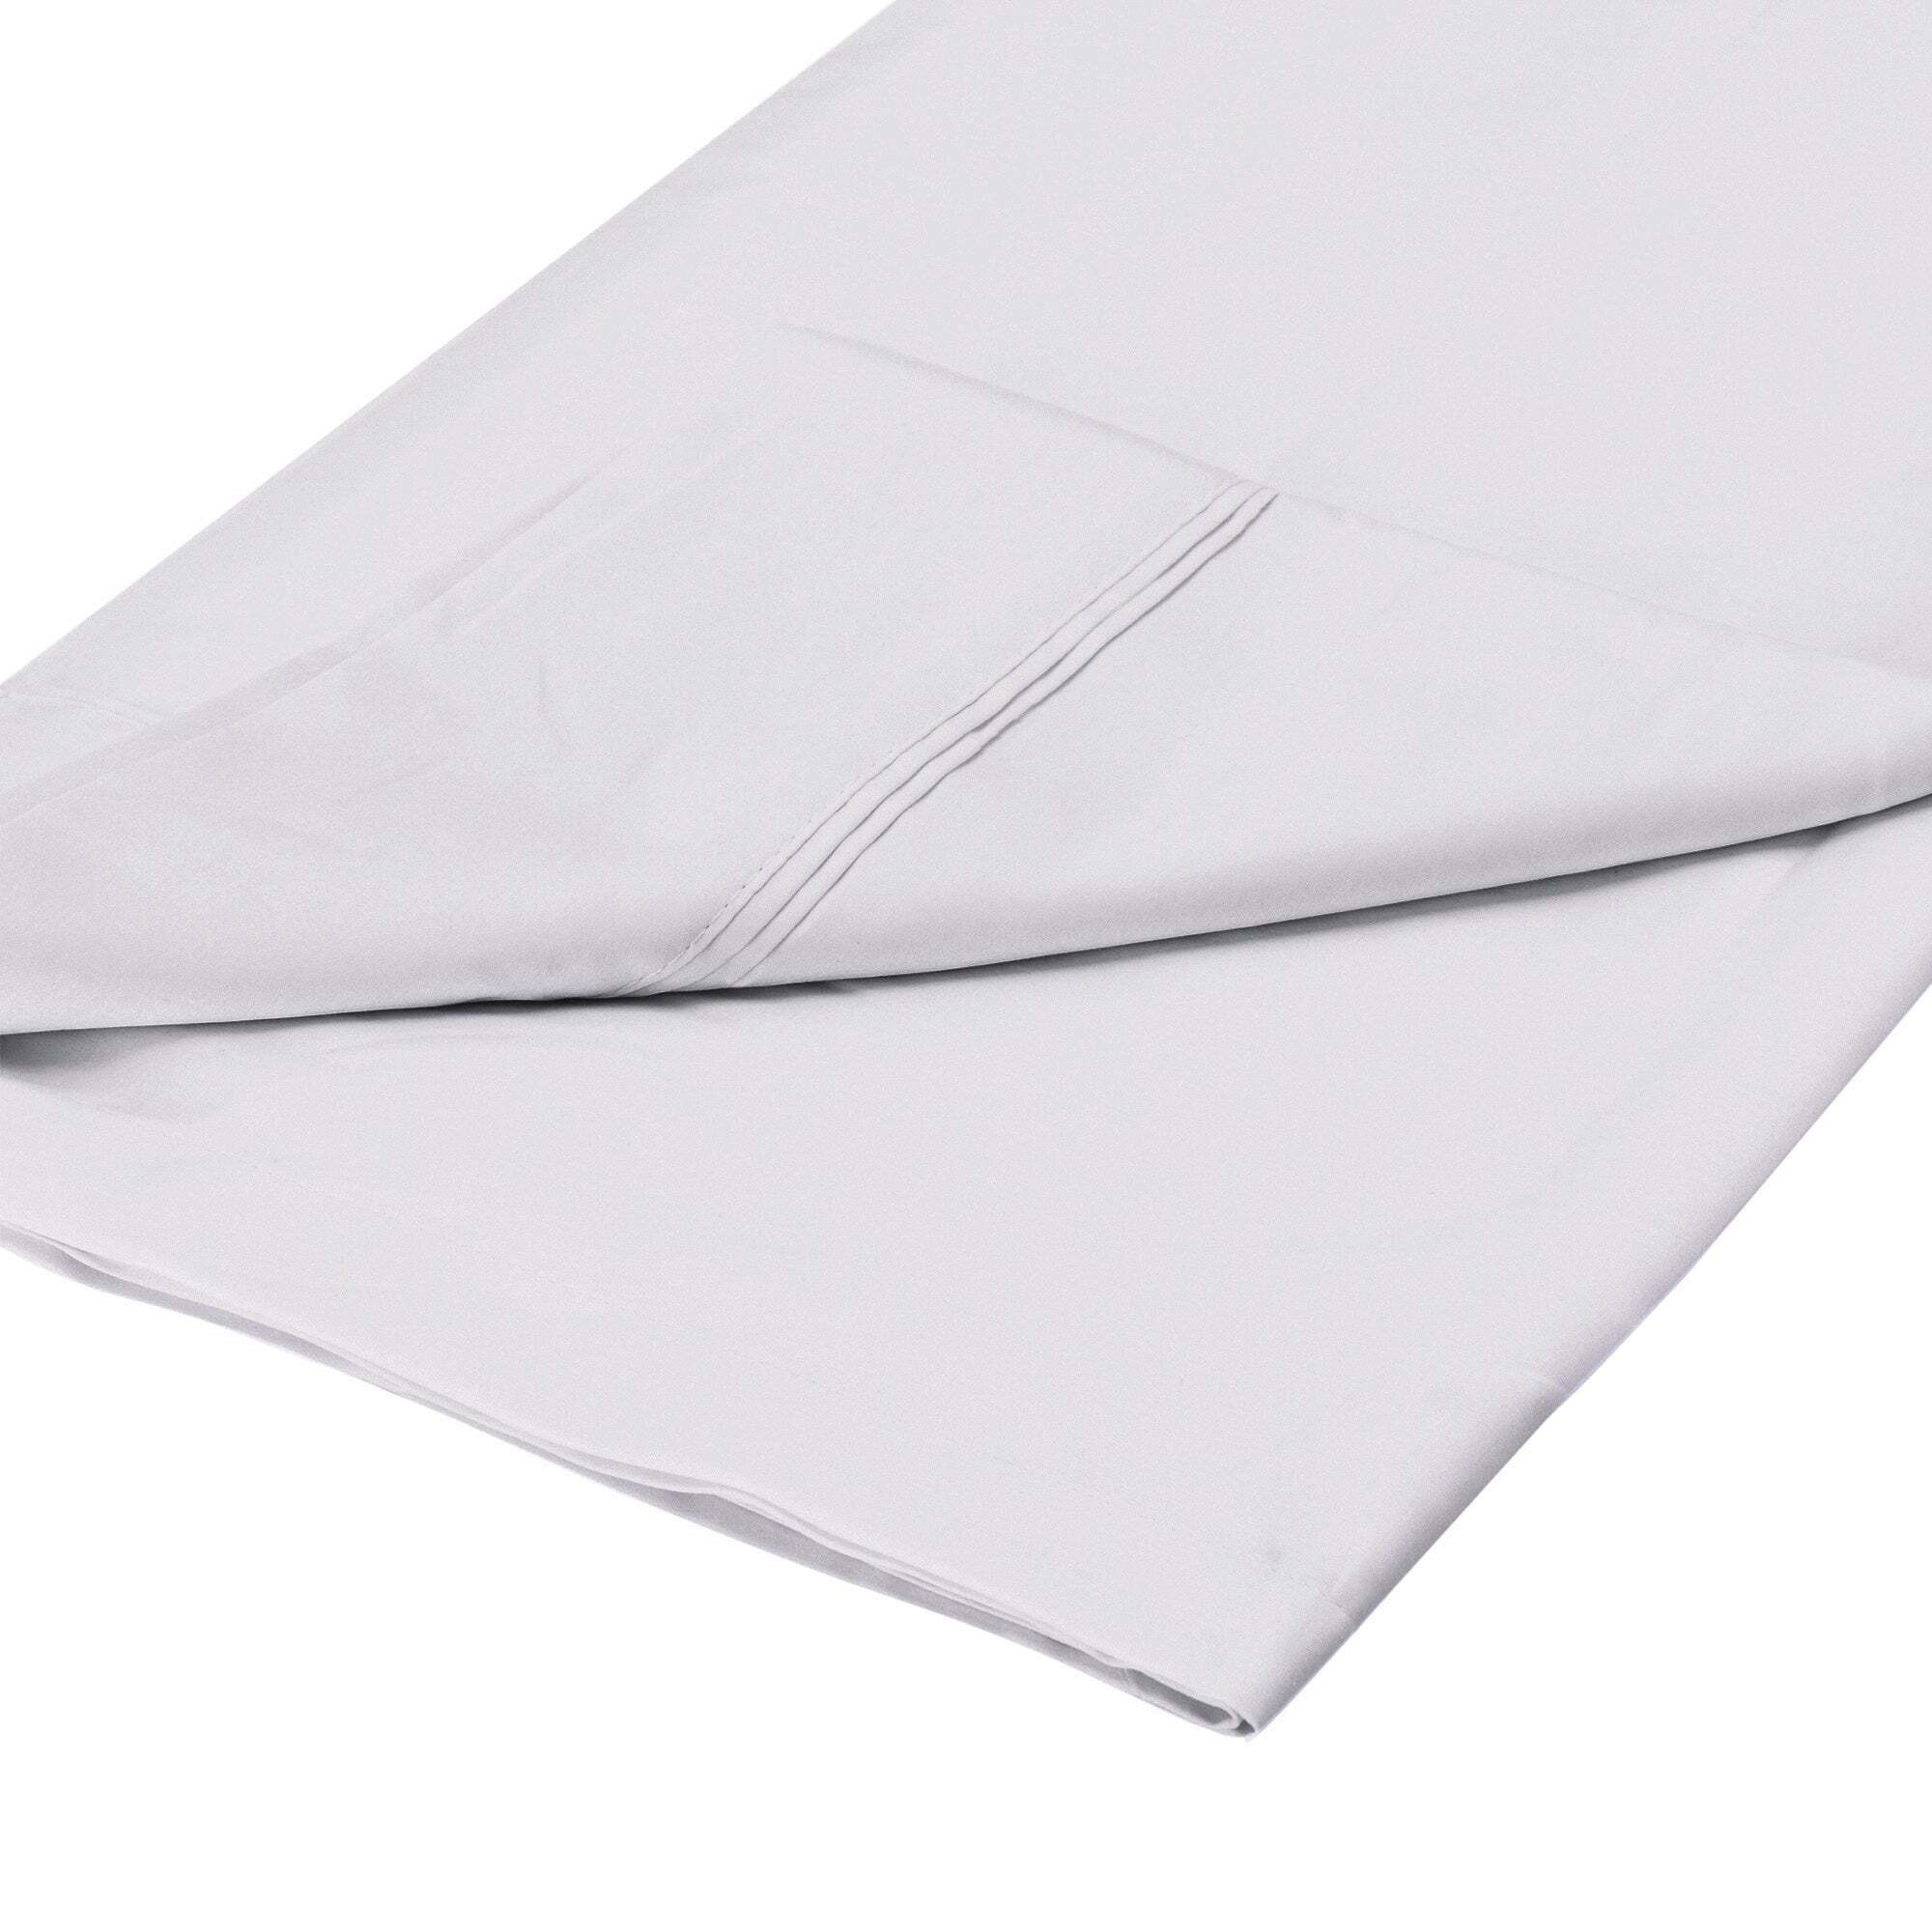 Dorma 500 Thread Count 100% Cotton Sateen Plain Flat Sheet Silver